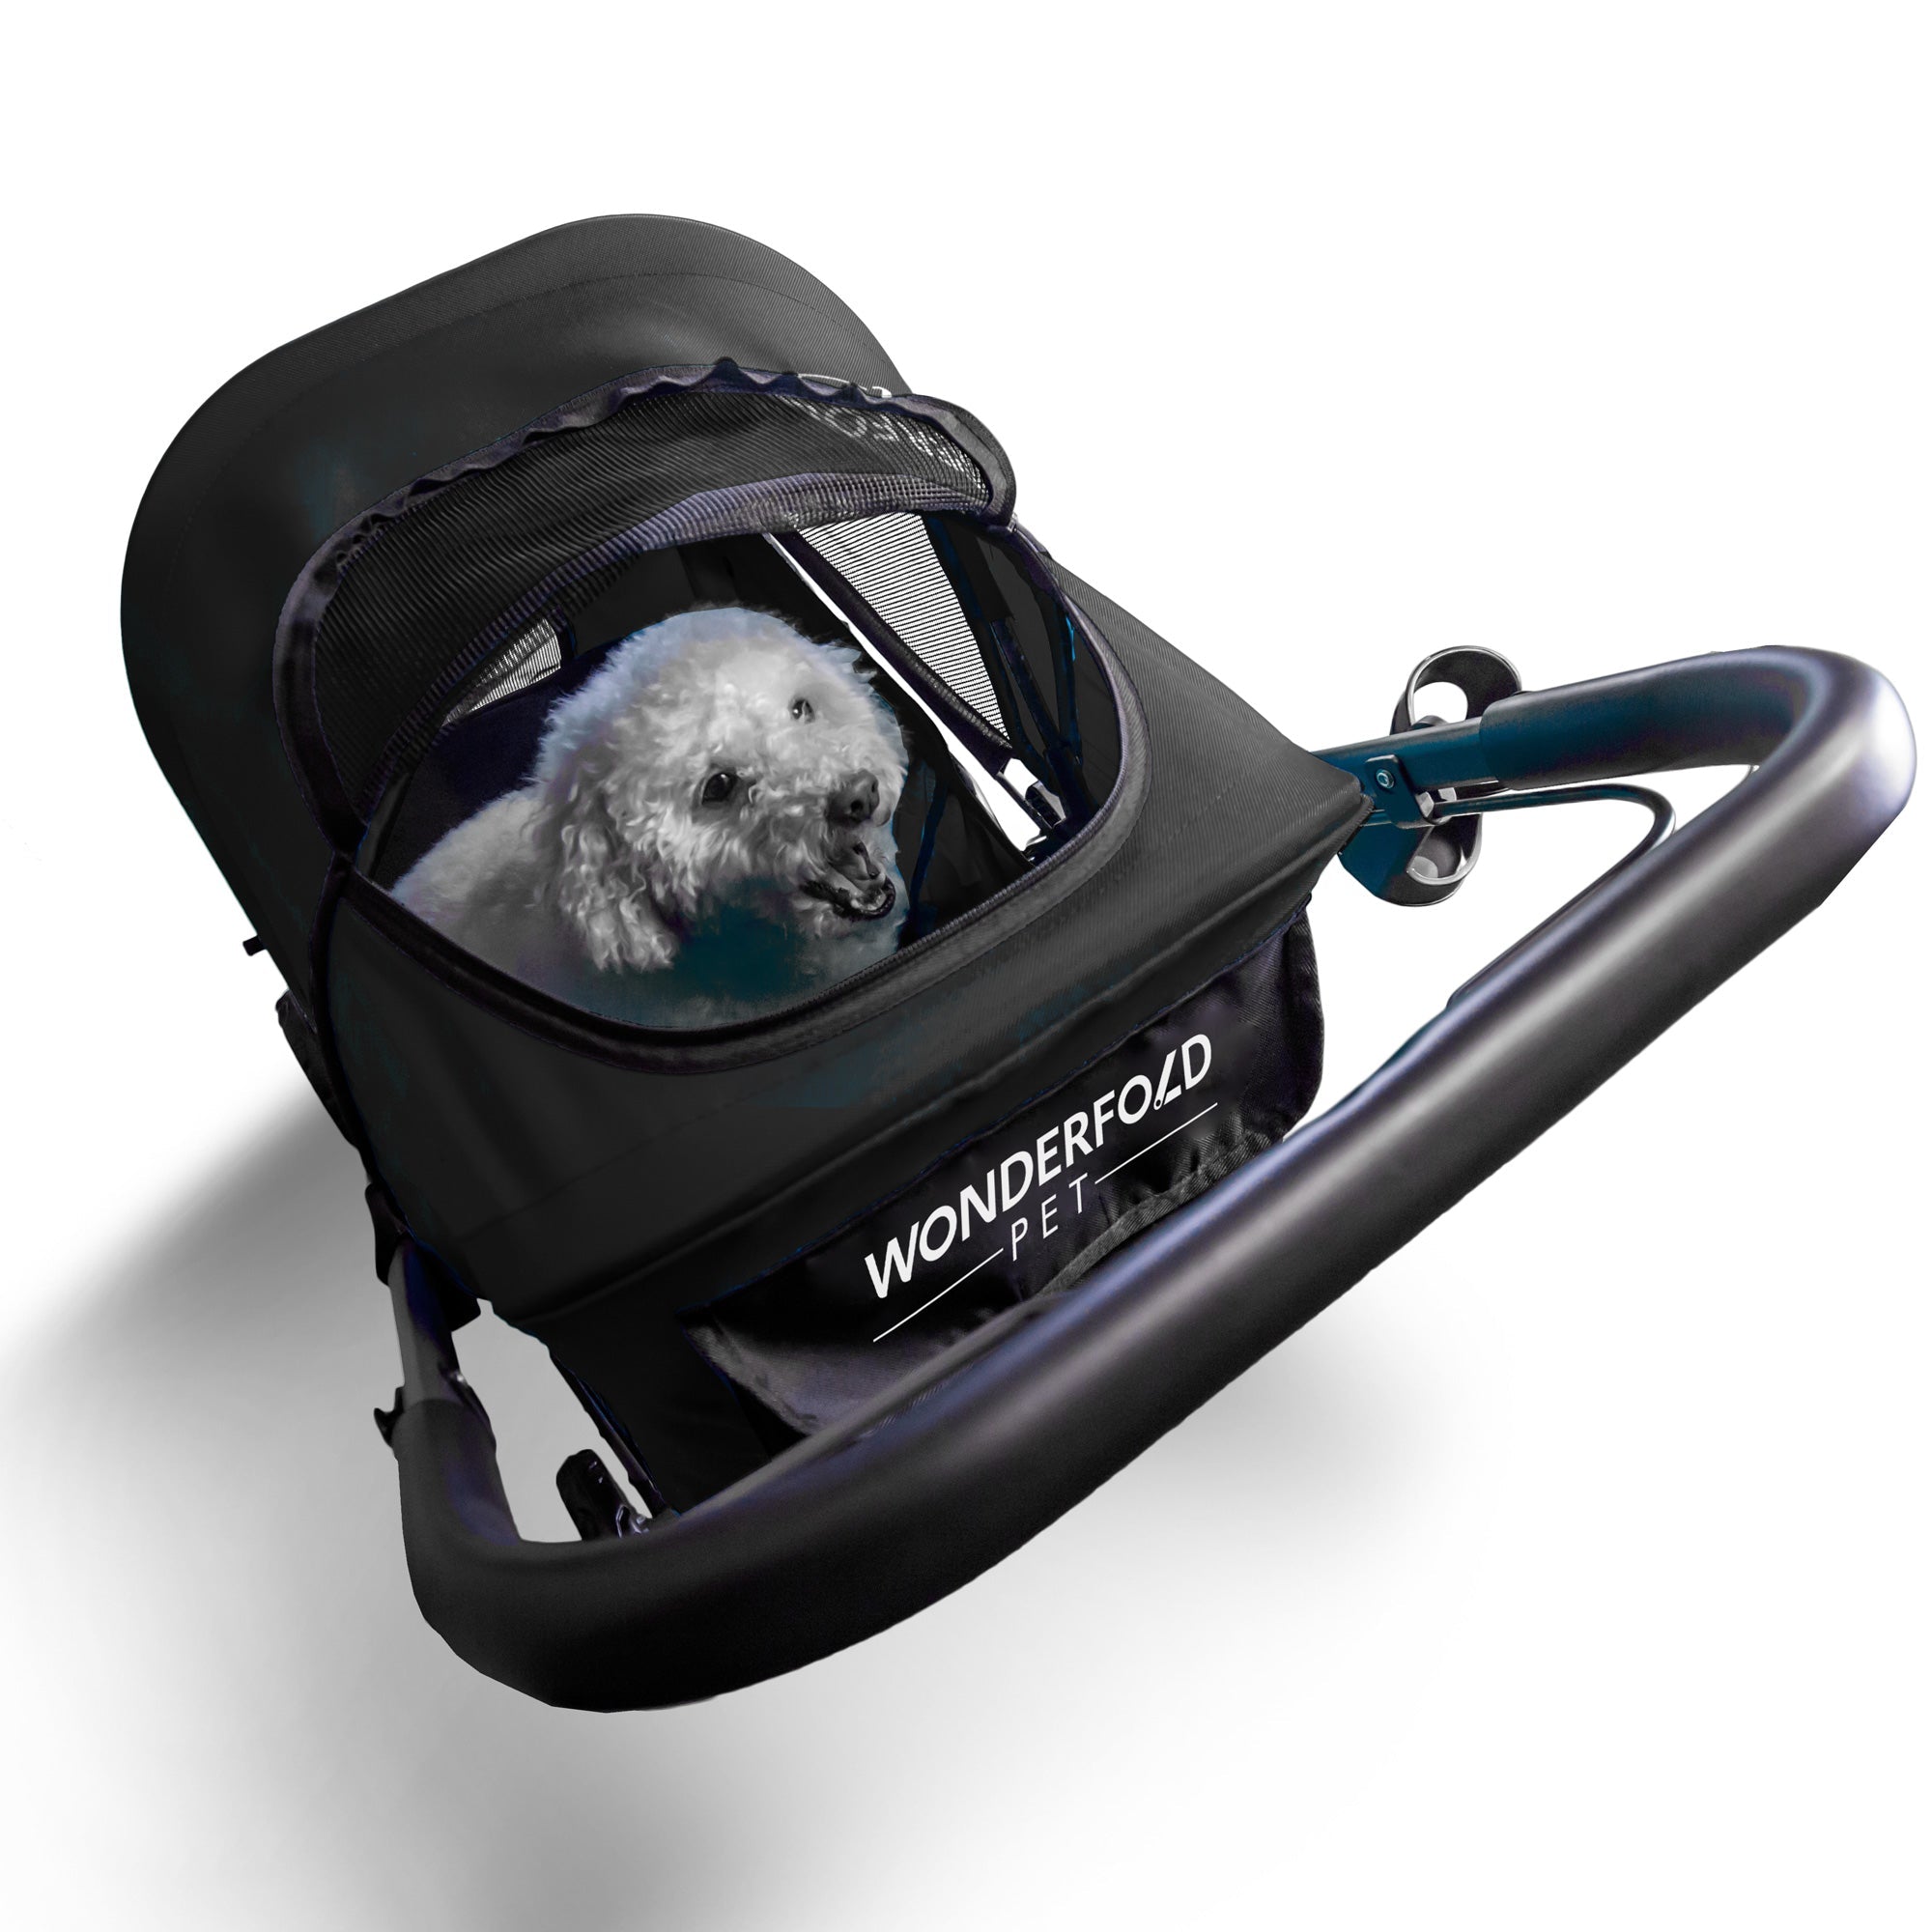 Folding Pet Stroller with Zipperless Entry & Reversible Handle Bar